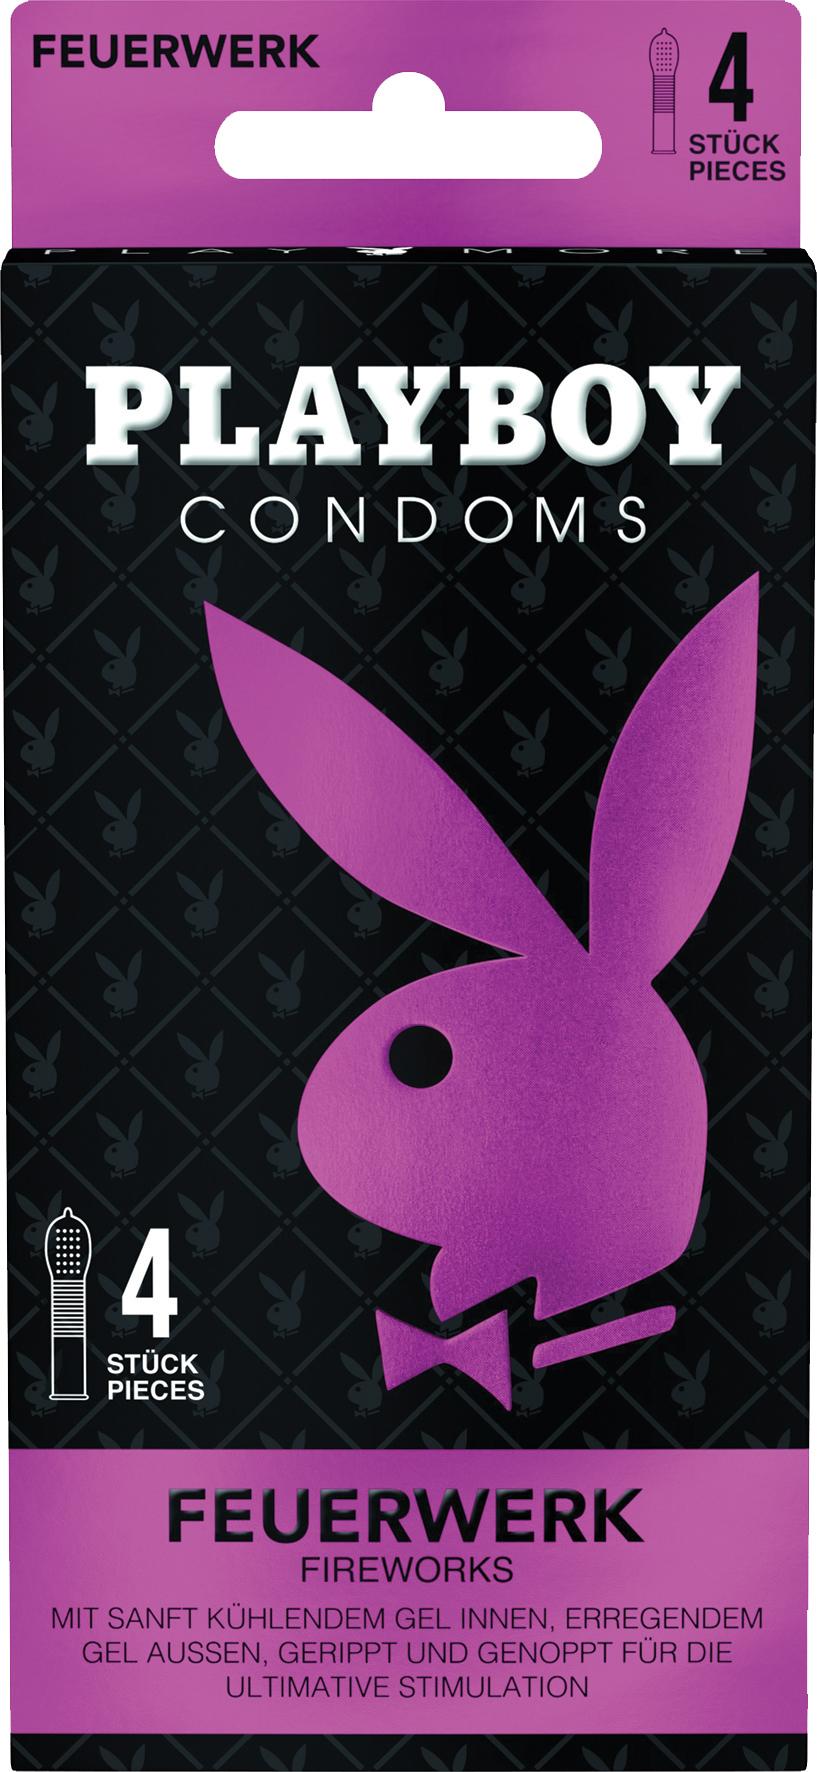  "PLAYBOY Condoms Feuerwerk 4er"